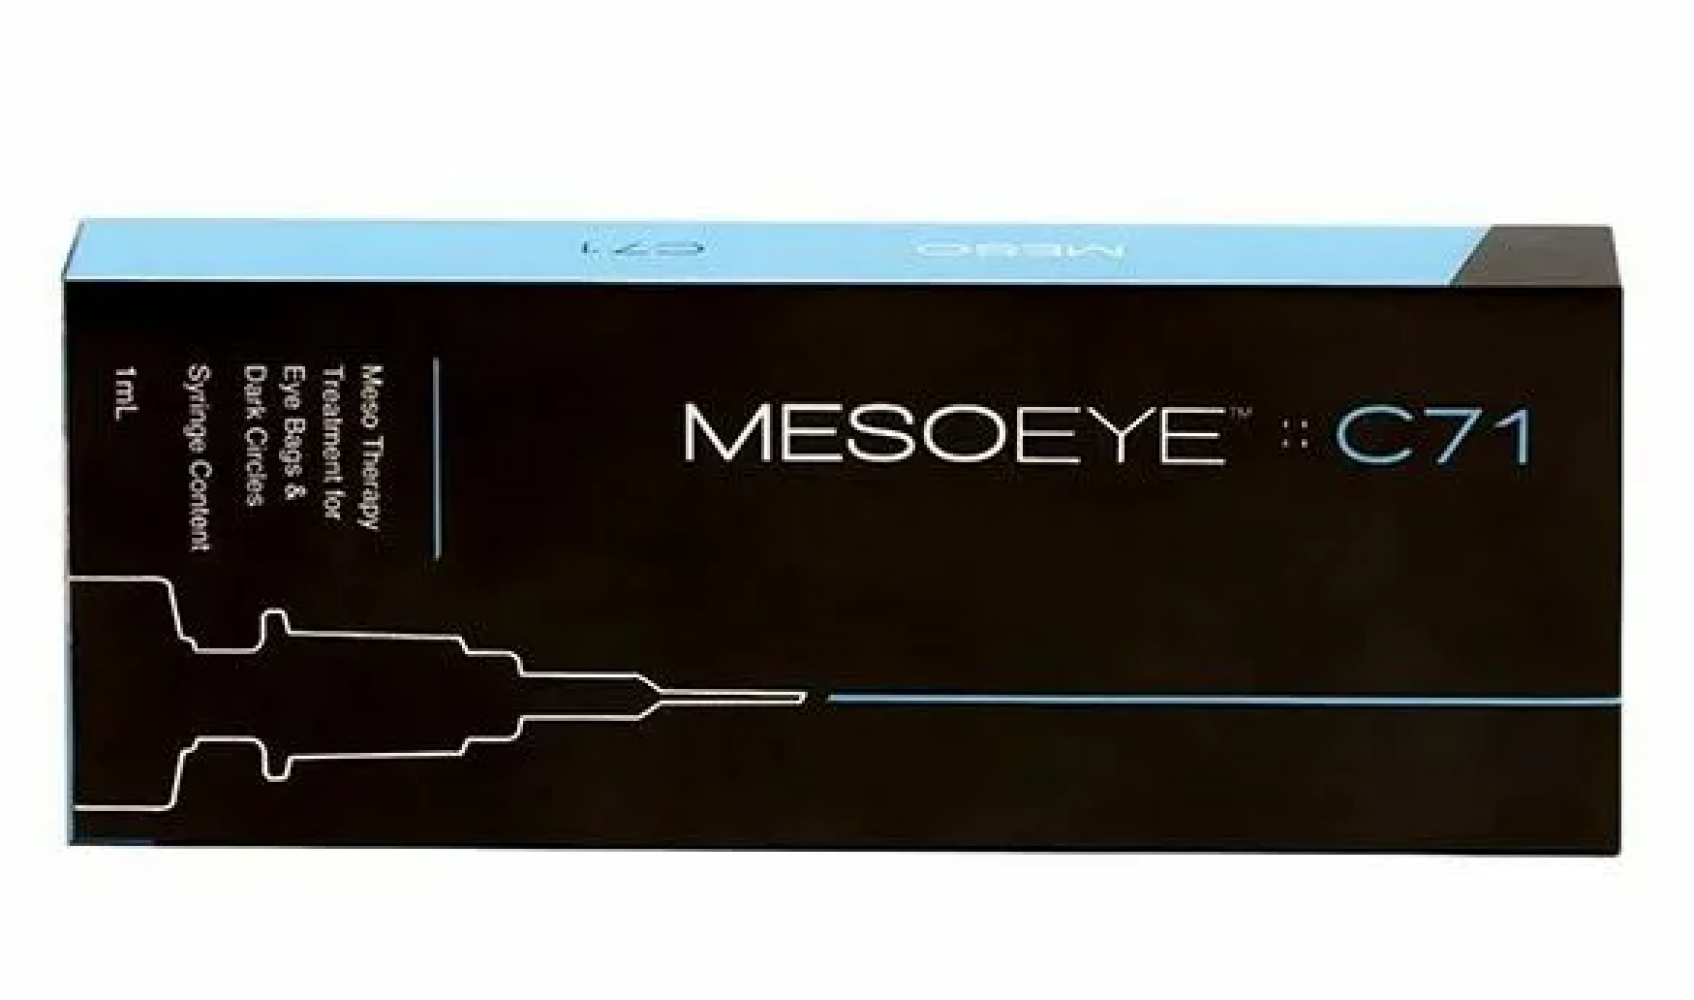 Мезо глаза отзывы. MESOEYE c71™. Meso Eye c 71 (1 мл). Препарат MESOEYE с71. Meso-Eye c71 1,0 ml.